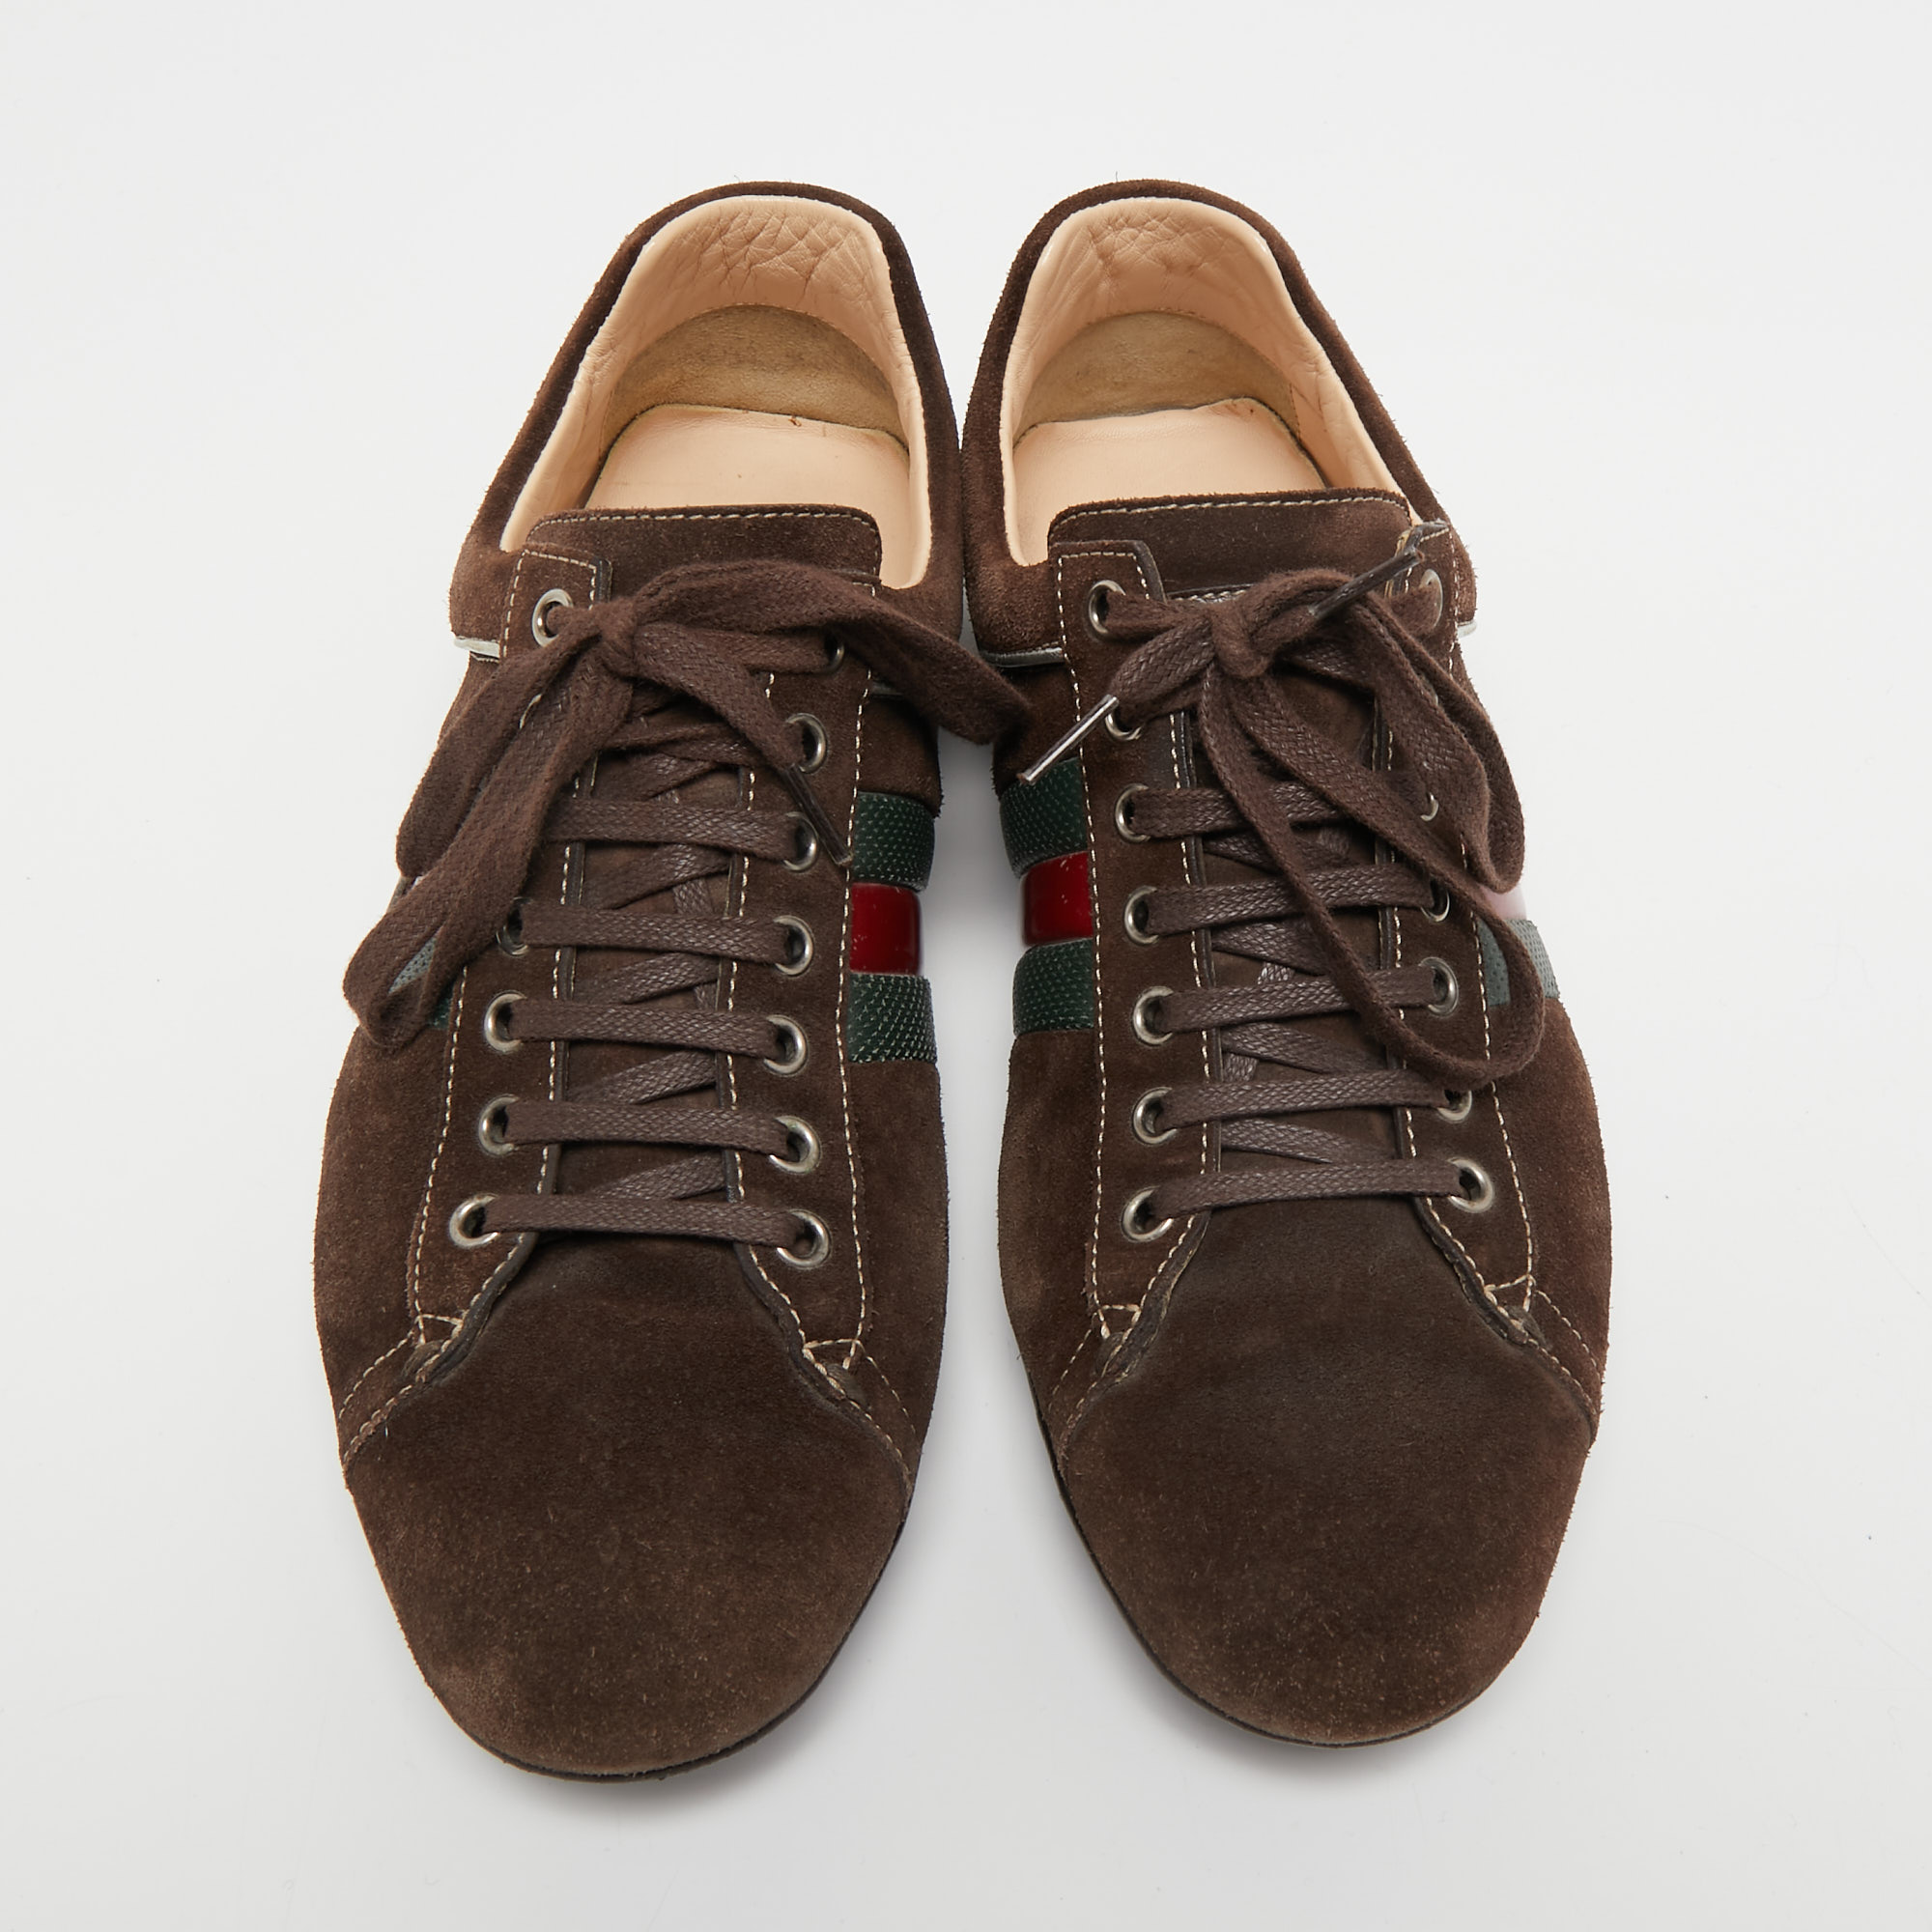 Gucci Dark Brown Suede Web Sneakers Size 40.5